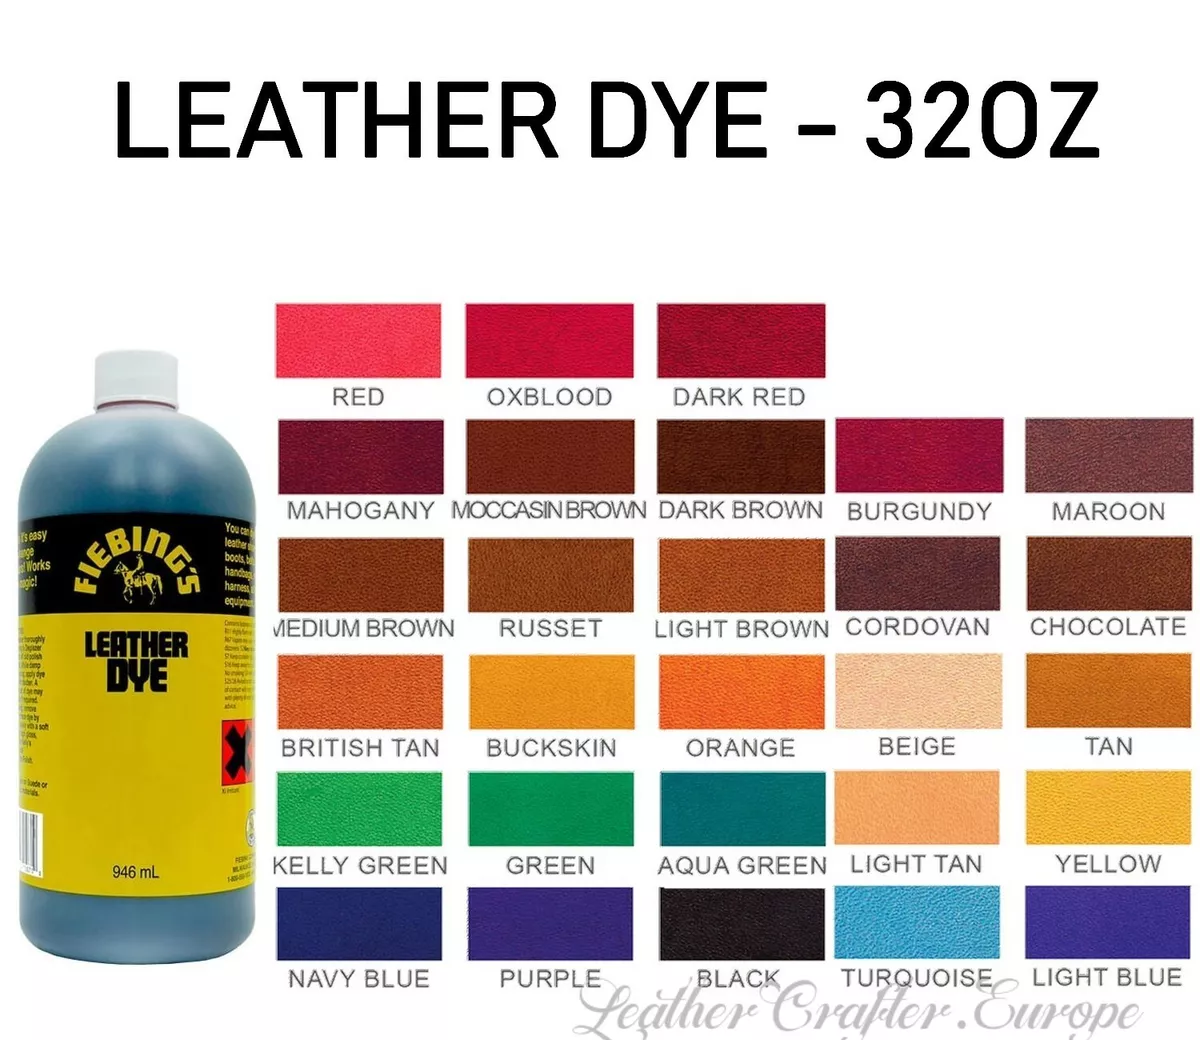 Fiebing's Leather dye 32oz (946ml) - all colors